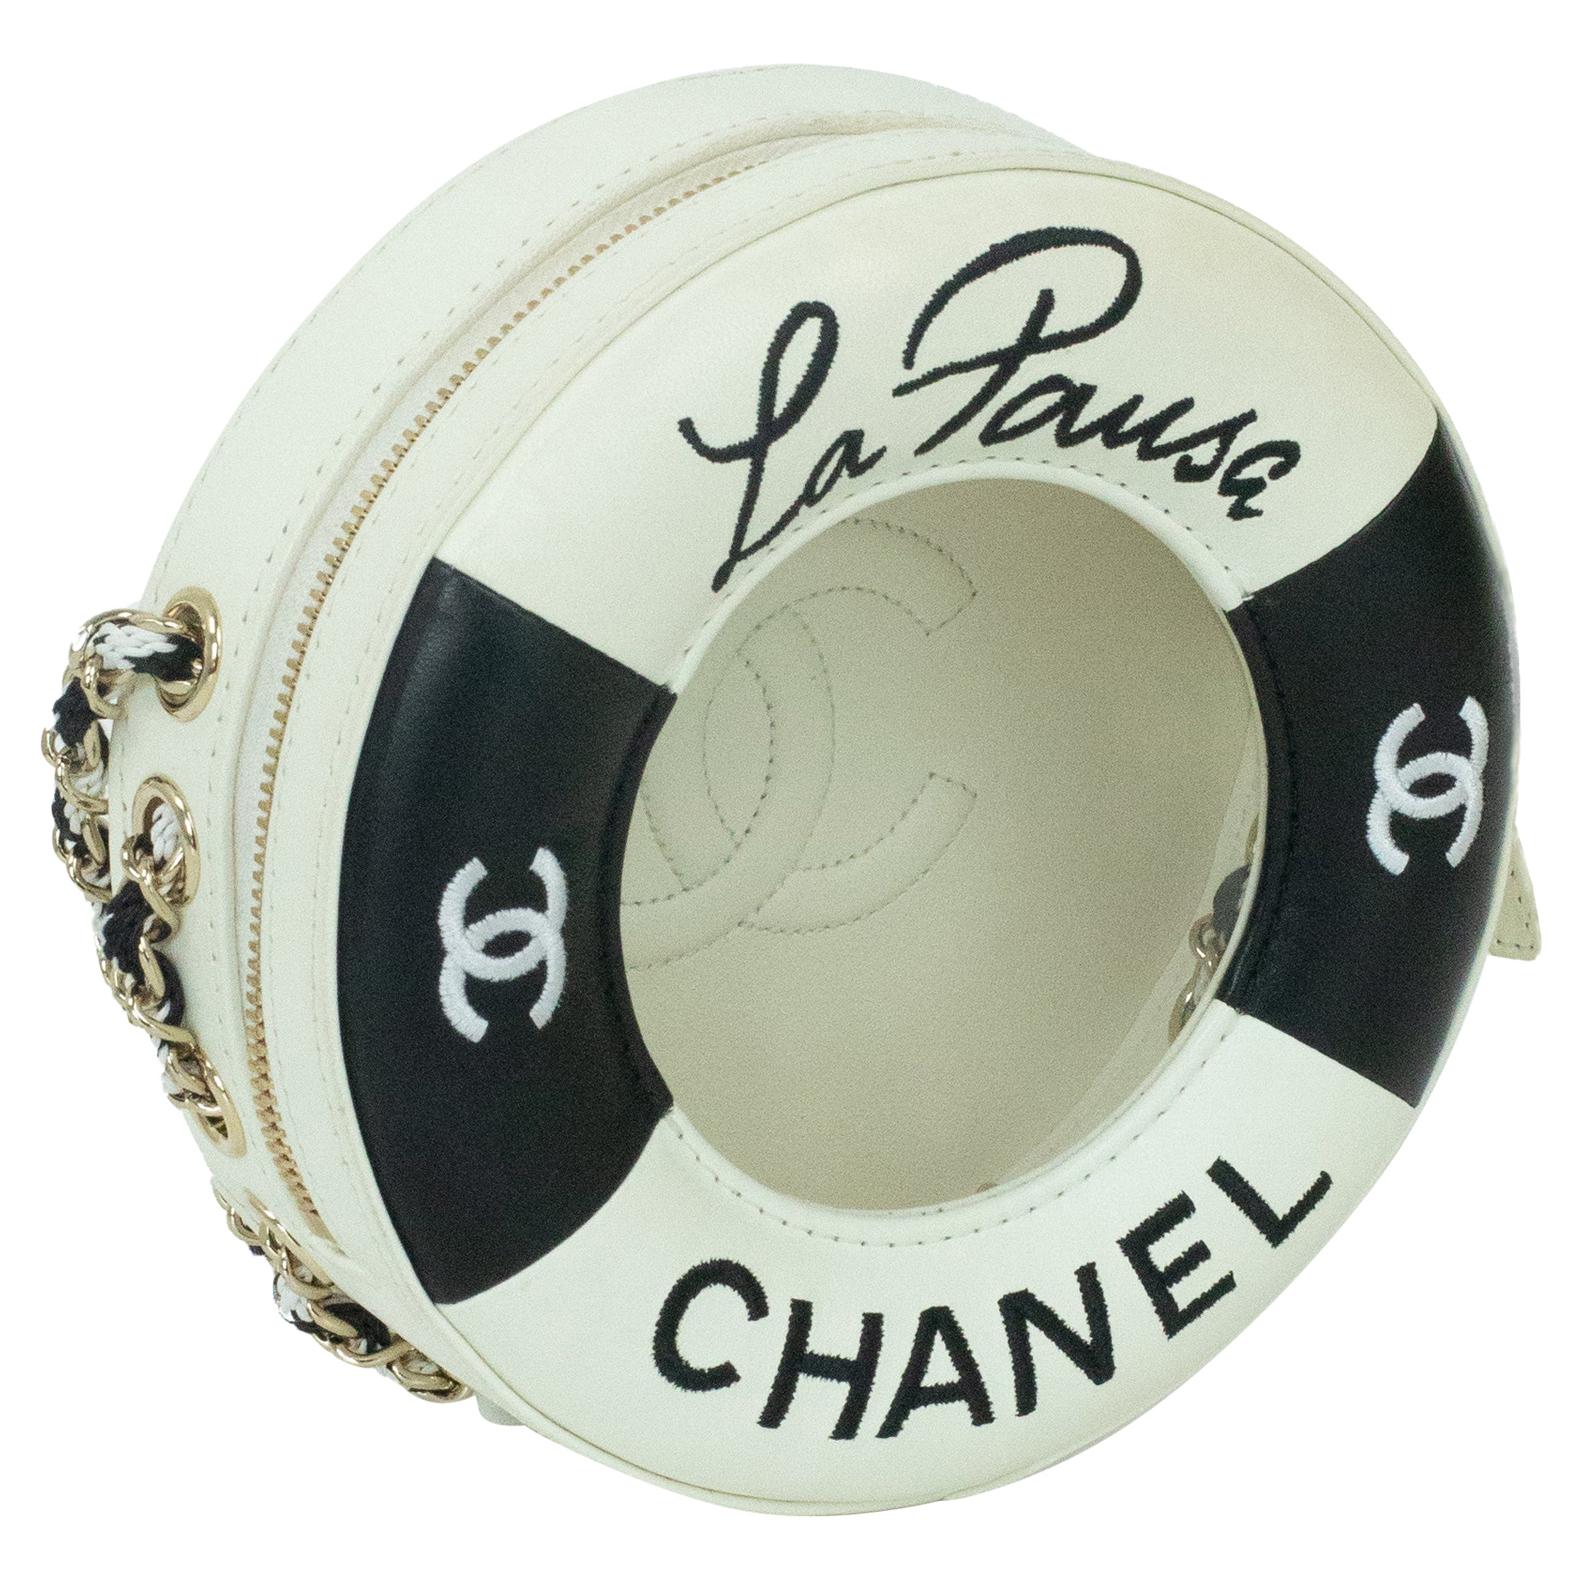 Chanel, La pausa in white leather